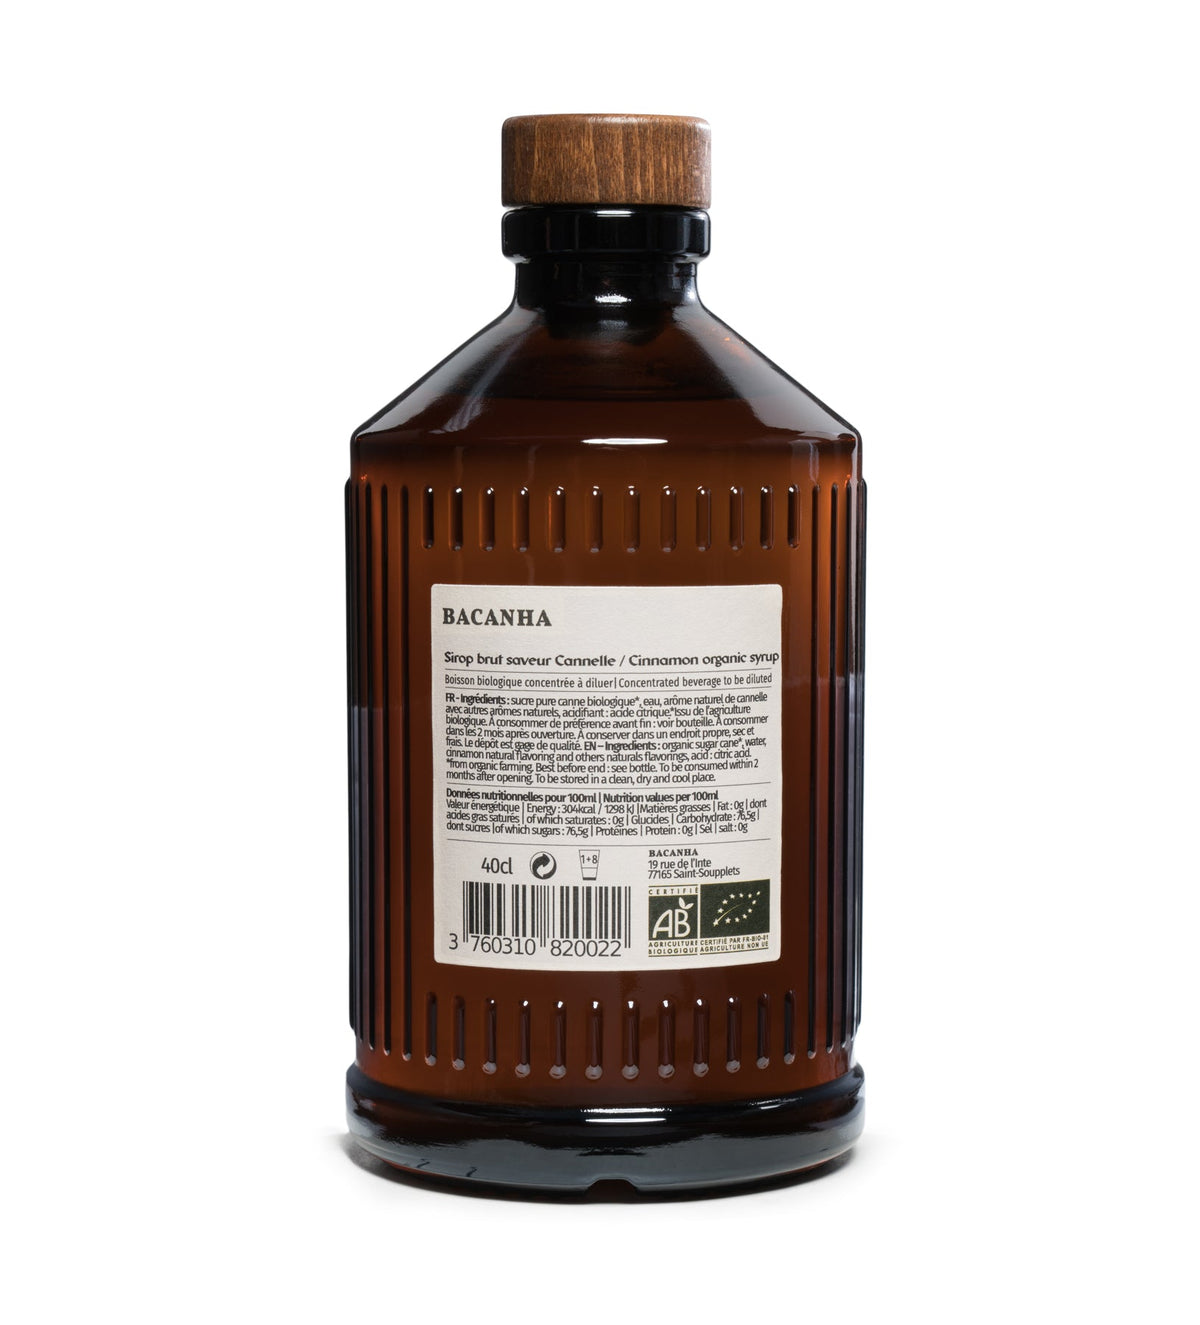 &lt;tc&gt;Bacanha Cinnamon flavored syrup [ORGANIC]&lt;/tc&gt;